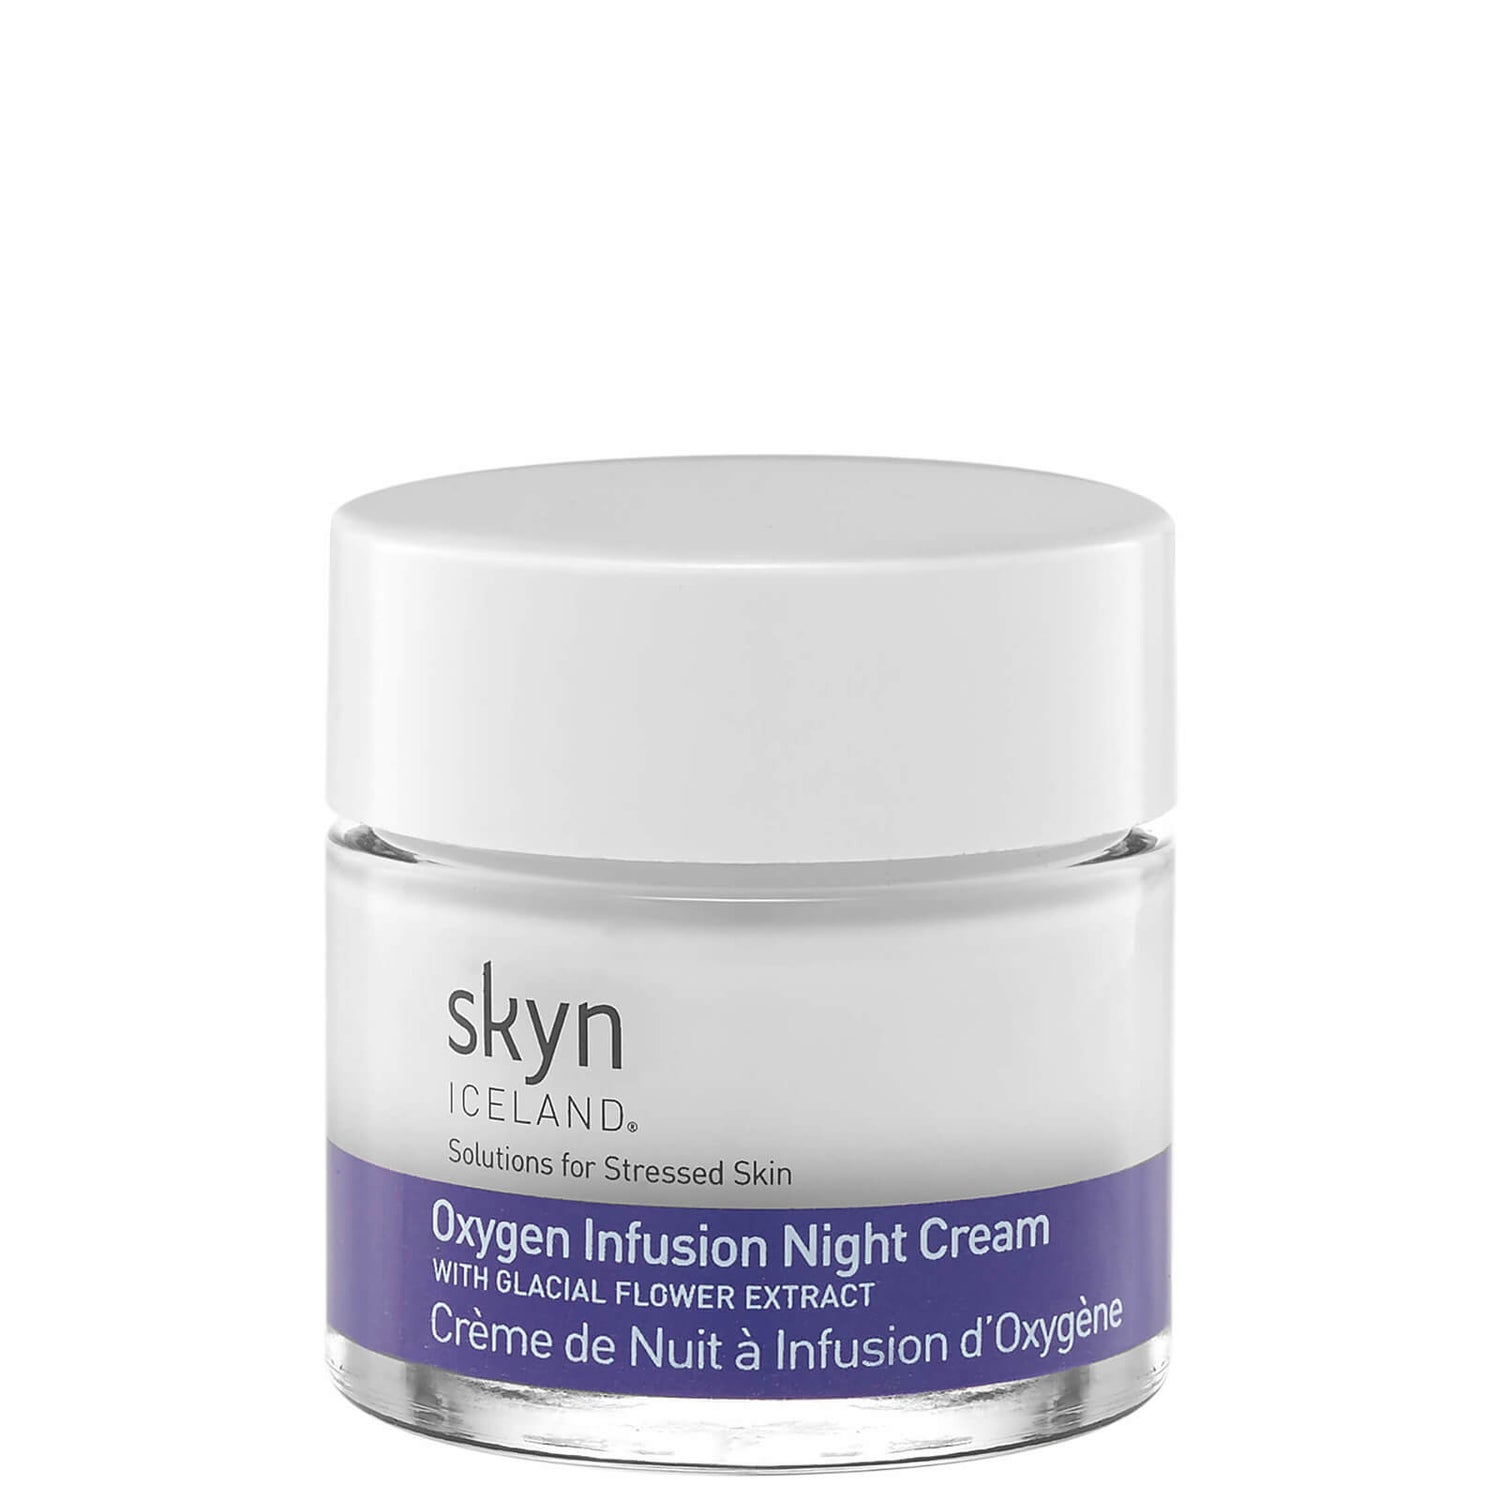 skyn ICELAND Oxygen Infusion Night Cream 56g